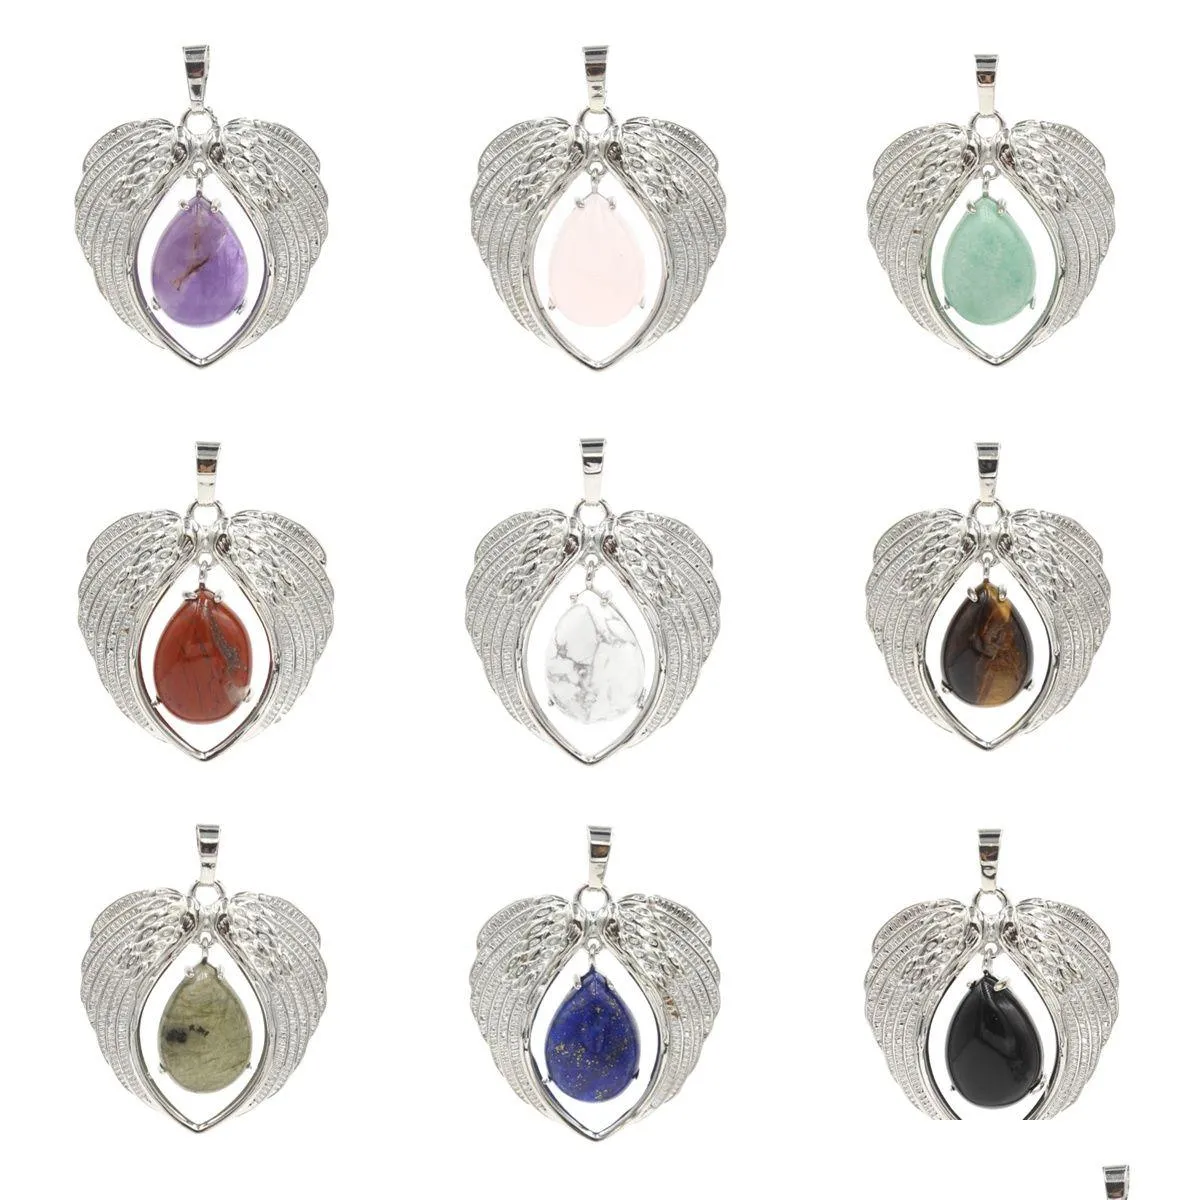 Silver Alloy Heart Gemstone Pendant for DIY Making Jewelry Angle Wings Teardrop Stone Choker Healing Chakra Crystal